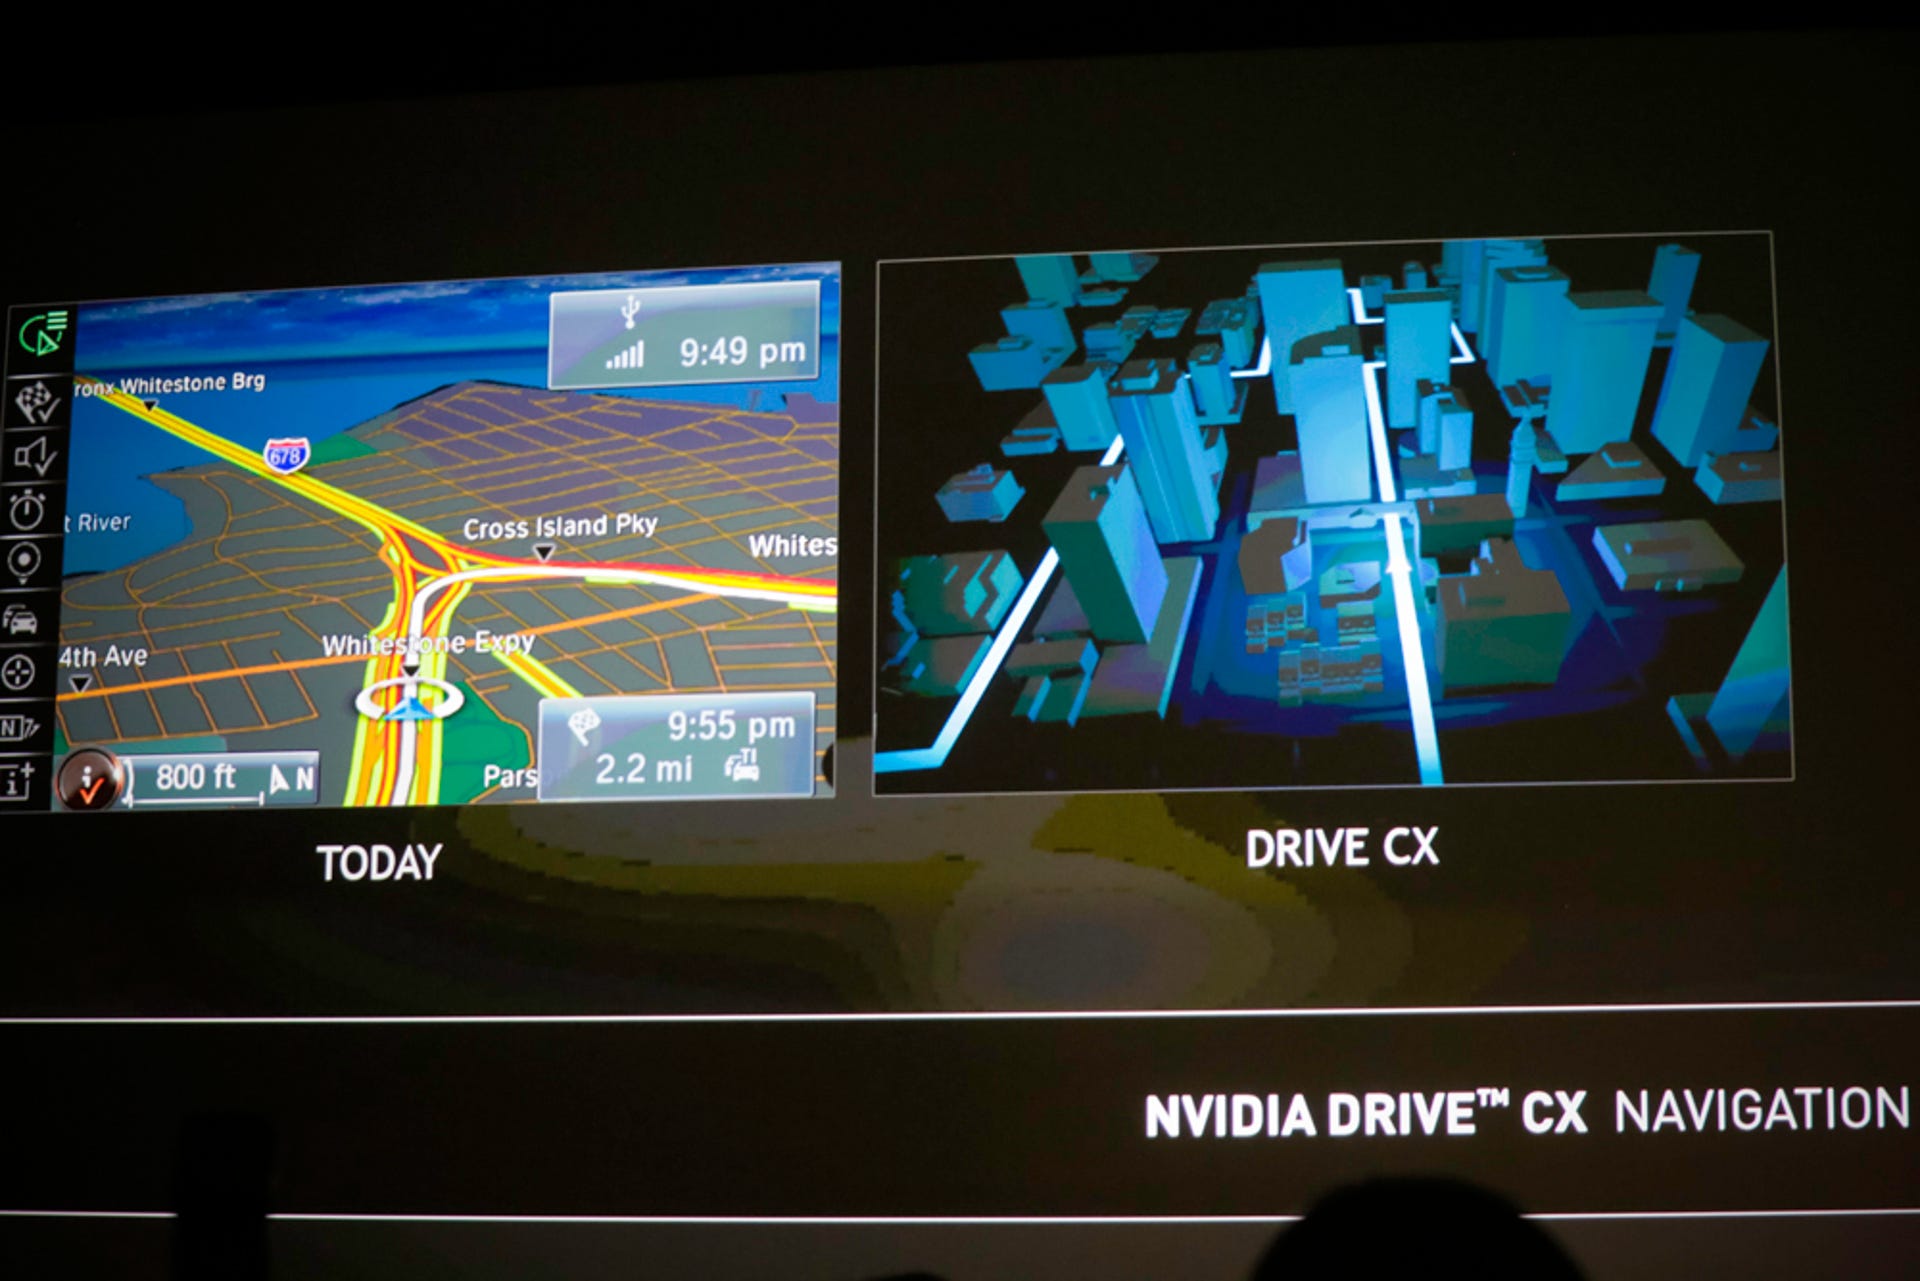 Nvidia Drive CX demonstration